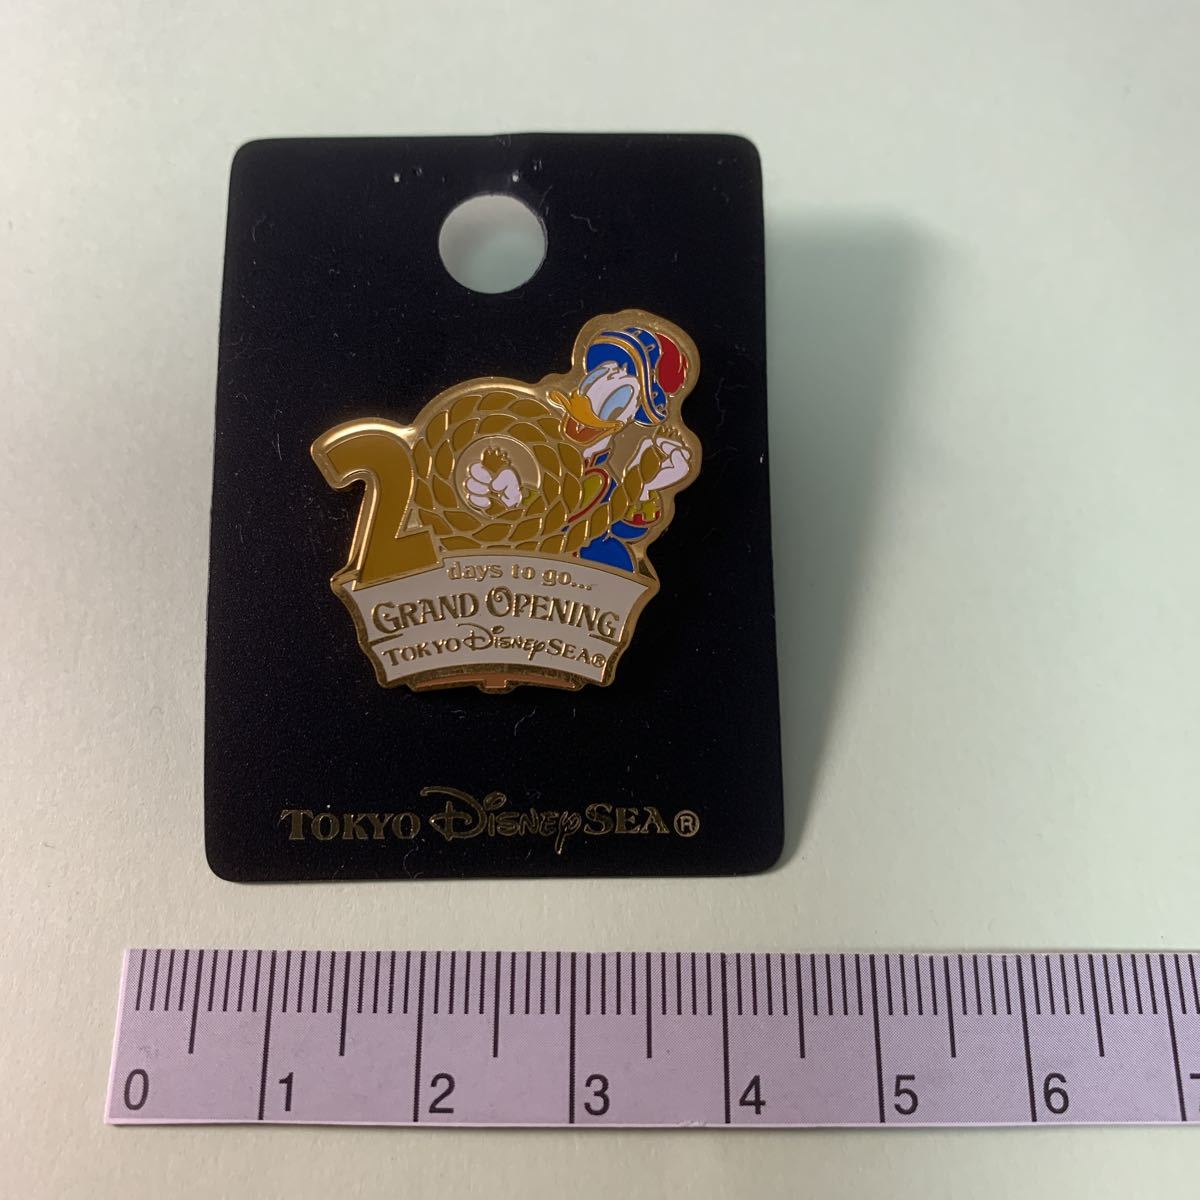  Disney si- Grand open 20 day front pin badge pin bachi2001 year 